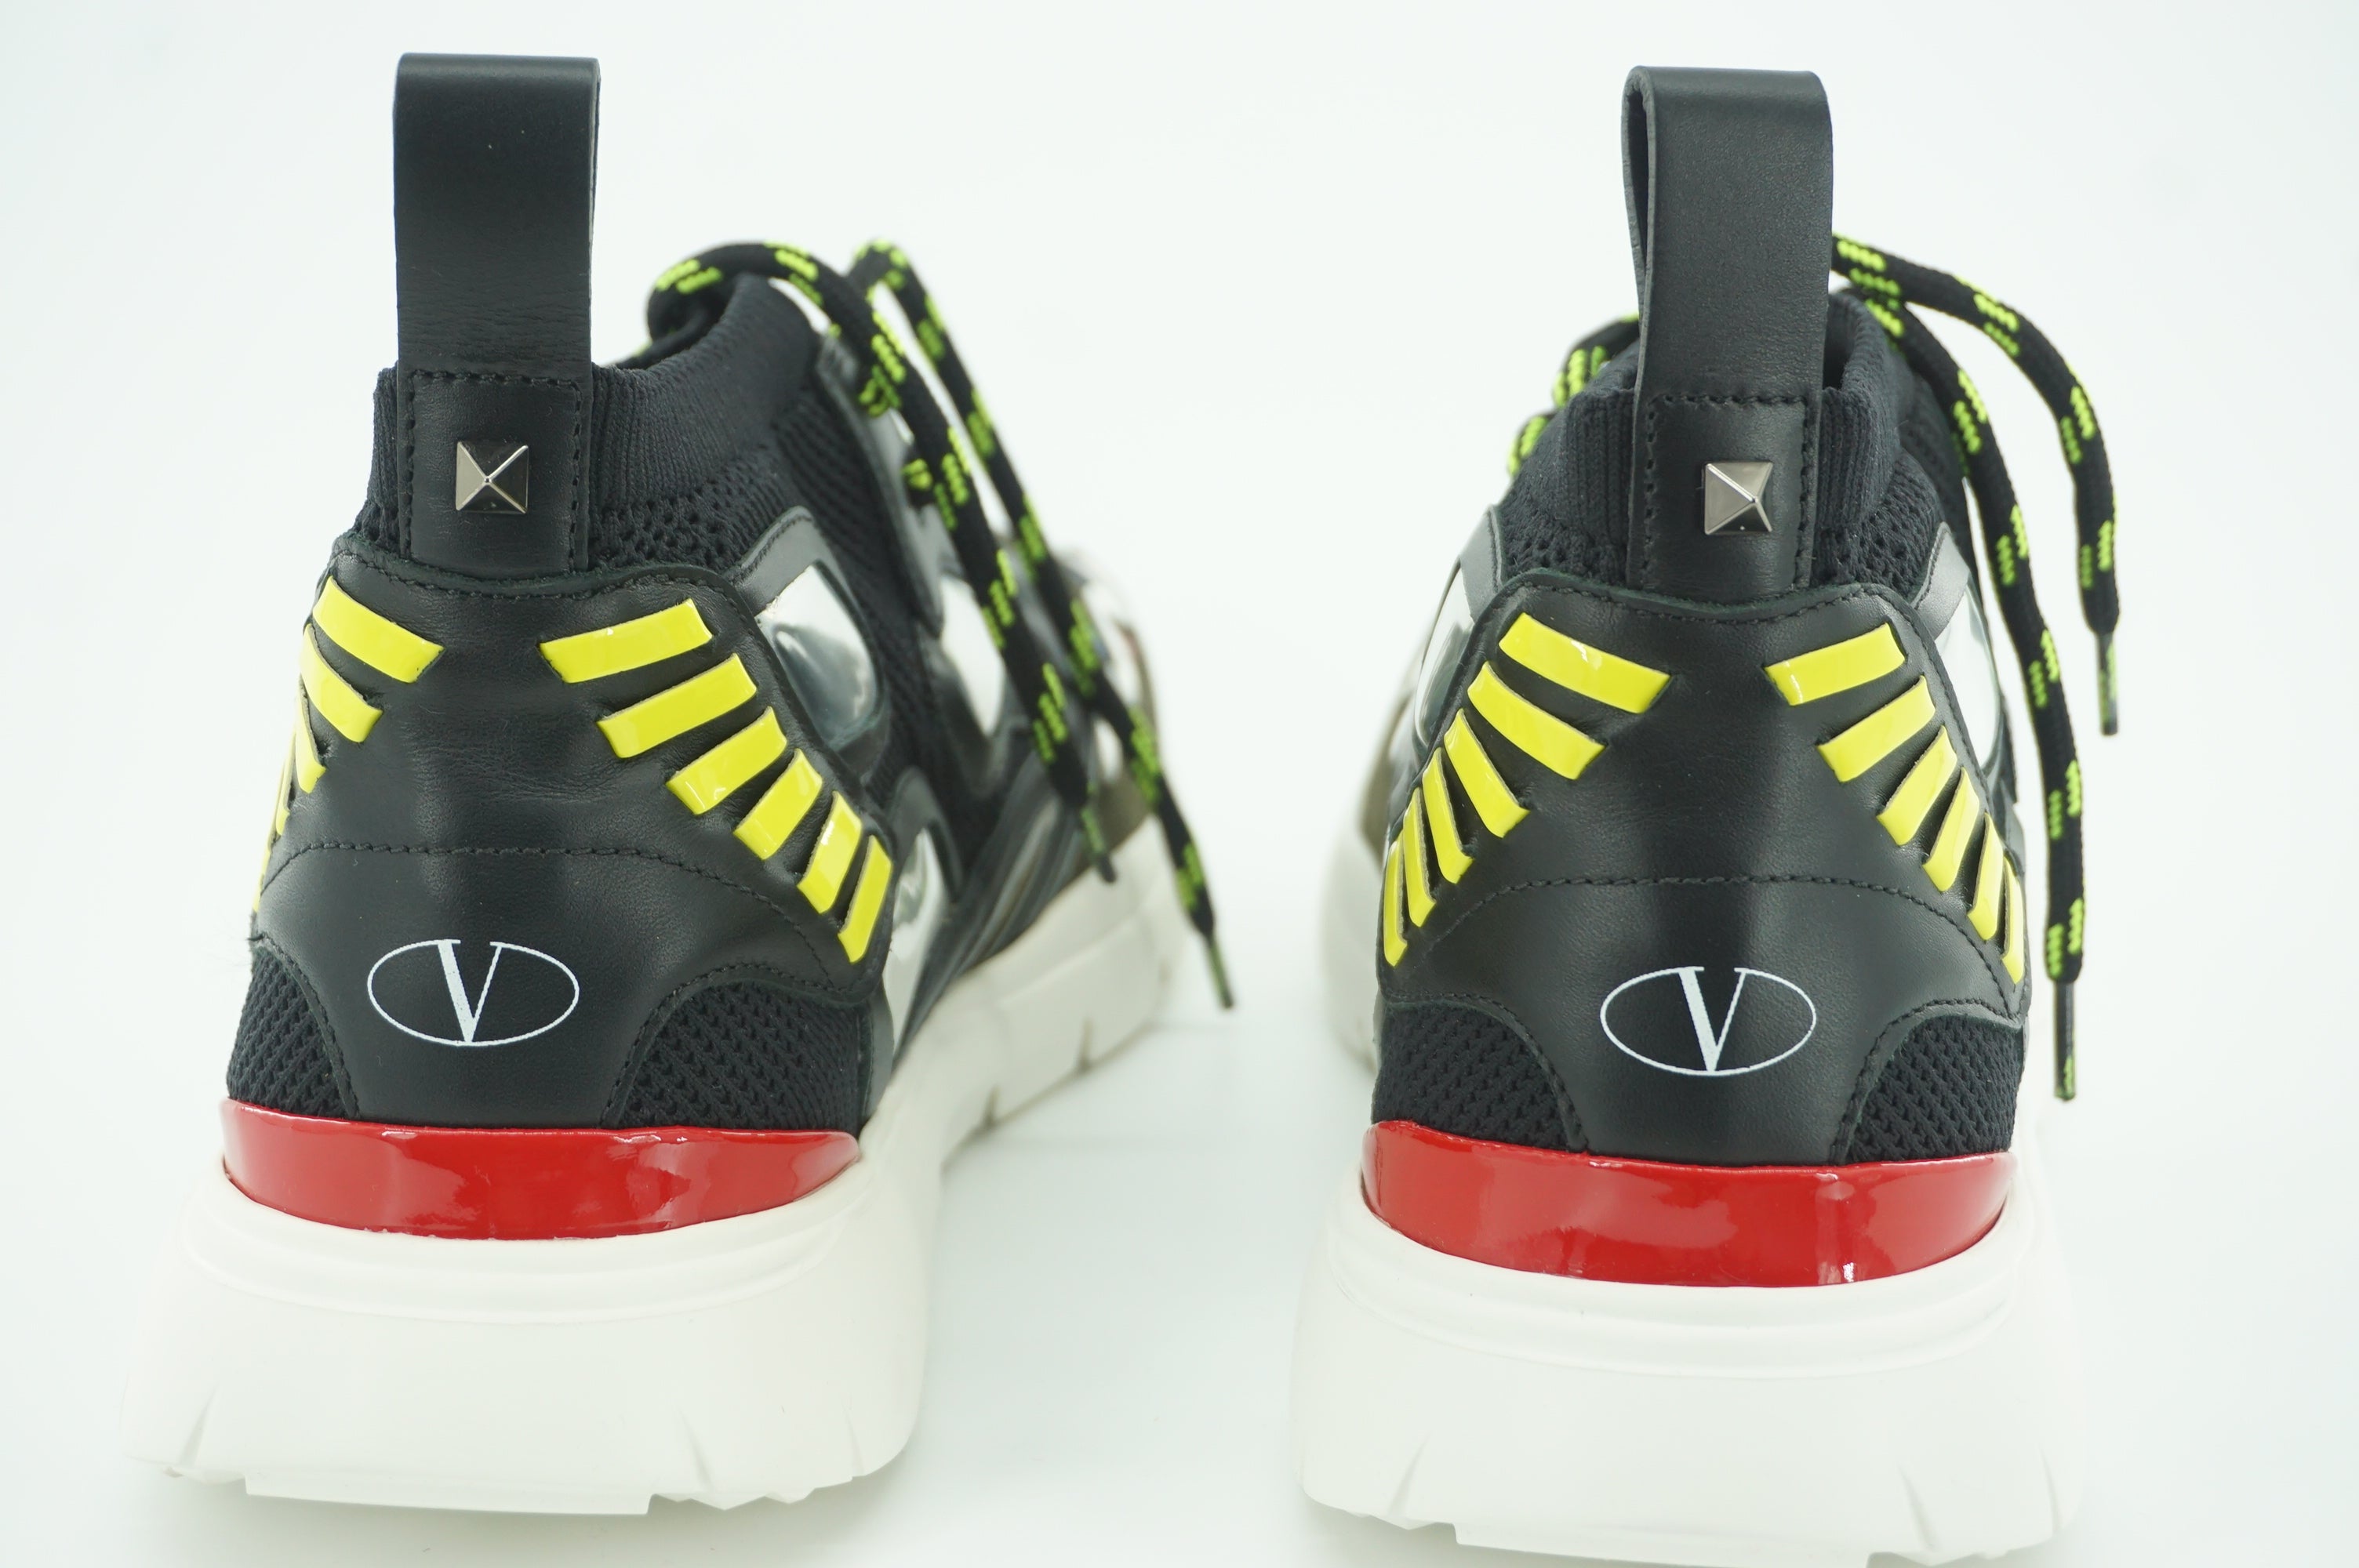 Valentino Mens Heros Reflex Sneaker Logo Sz 43.5 10.5US Mid top lace up NIB $890